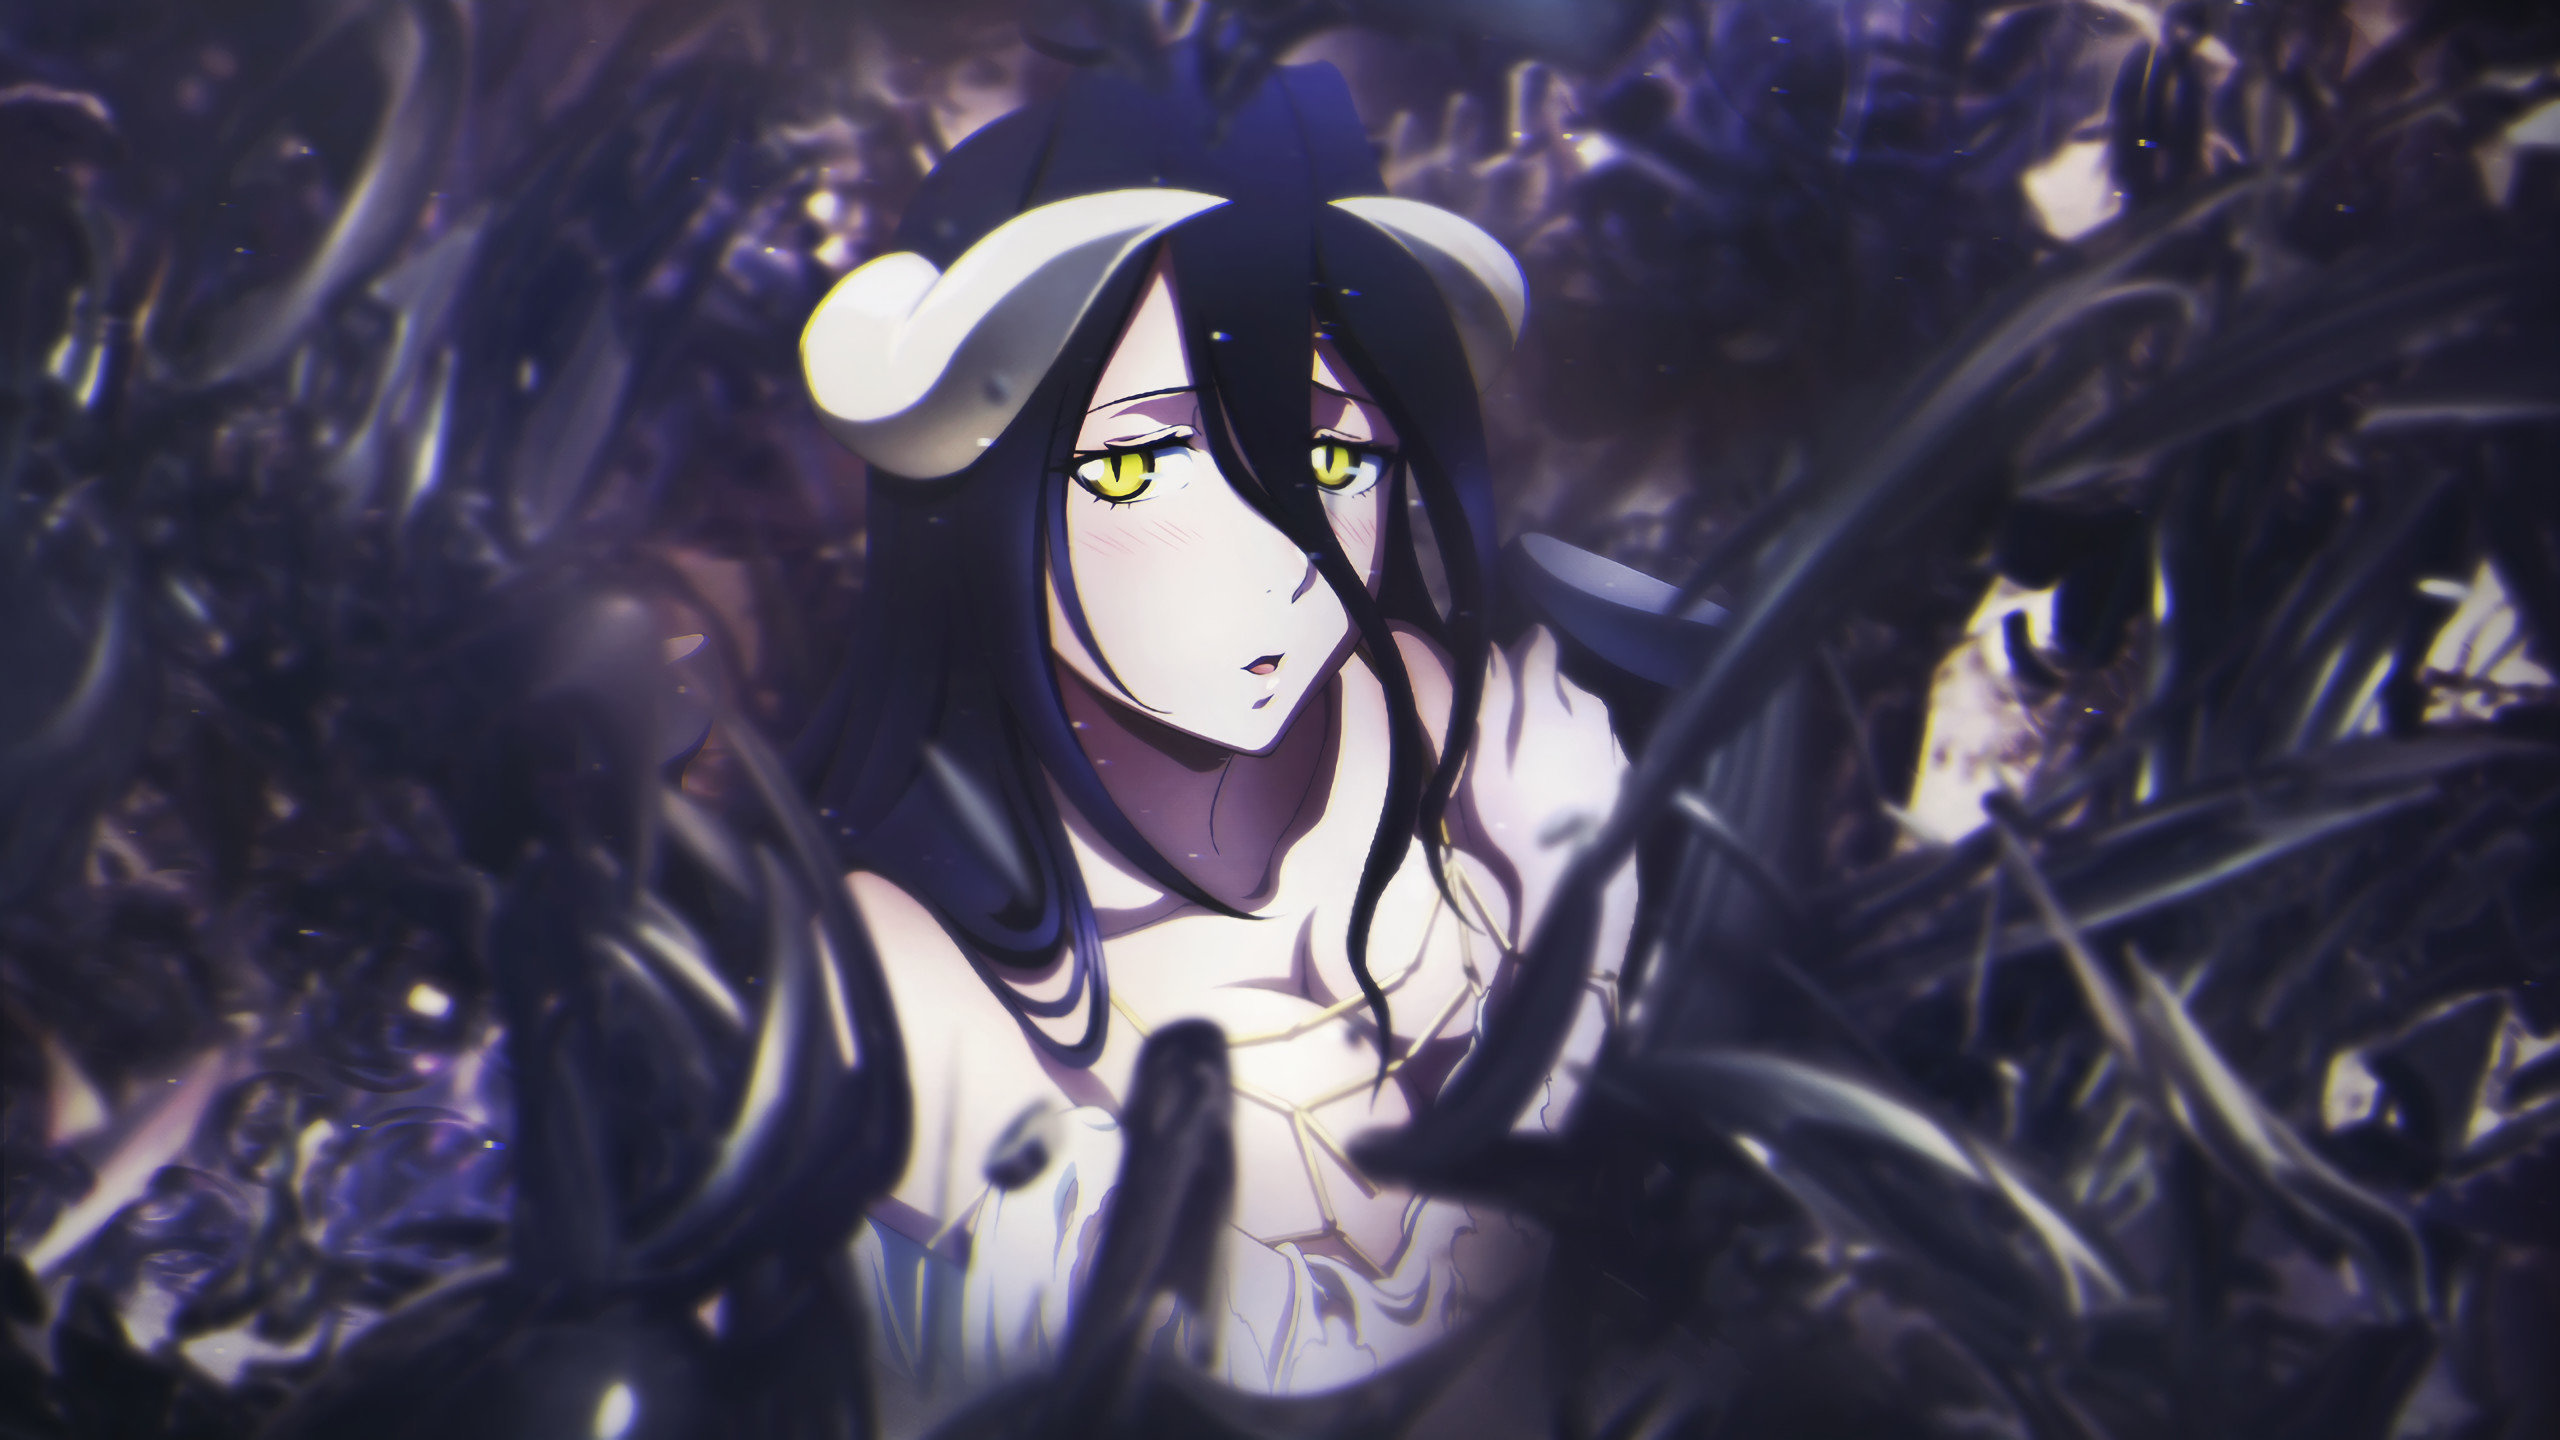 Download wallpaper x albedo overlord anime girl dark dual wide x hd background